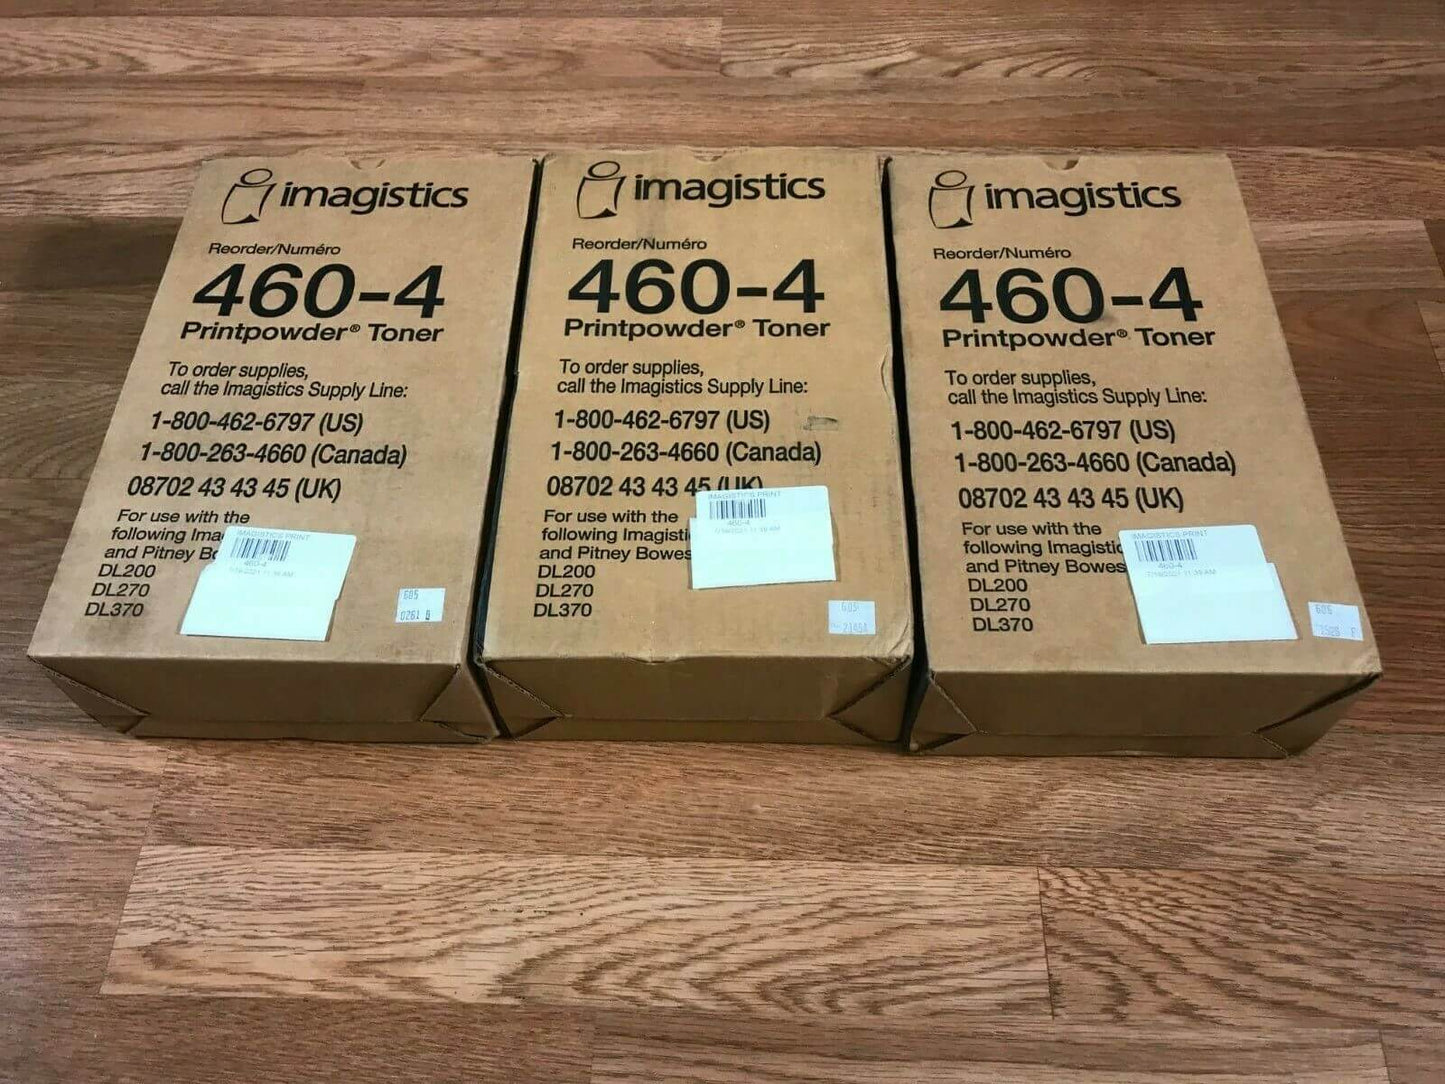 3 Imagistics 460-4 Printpowder Toner For DL200, DL270, DL370 Same Day Shipping!! - copier-clearance-center